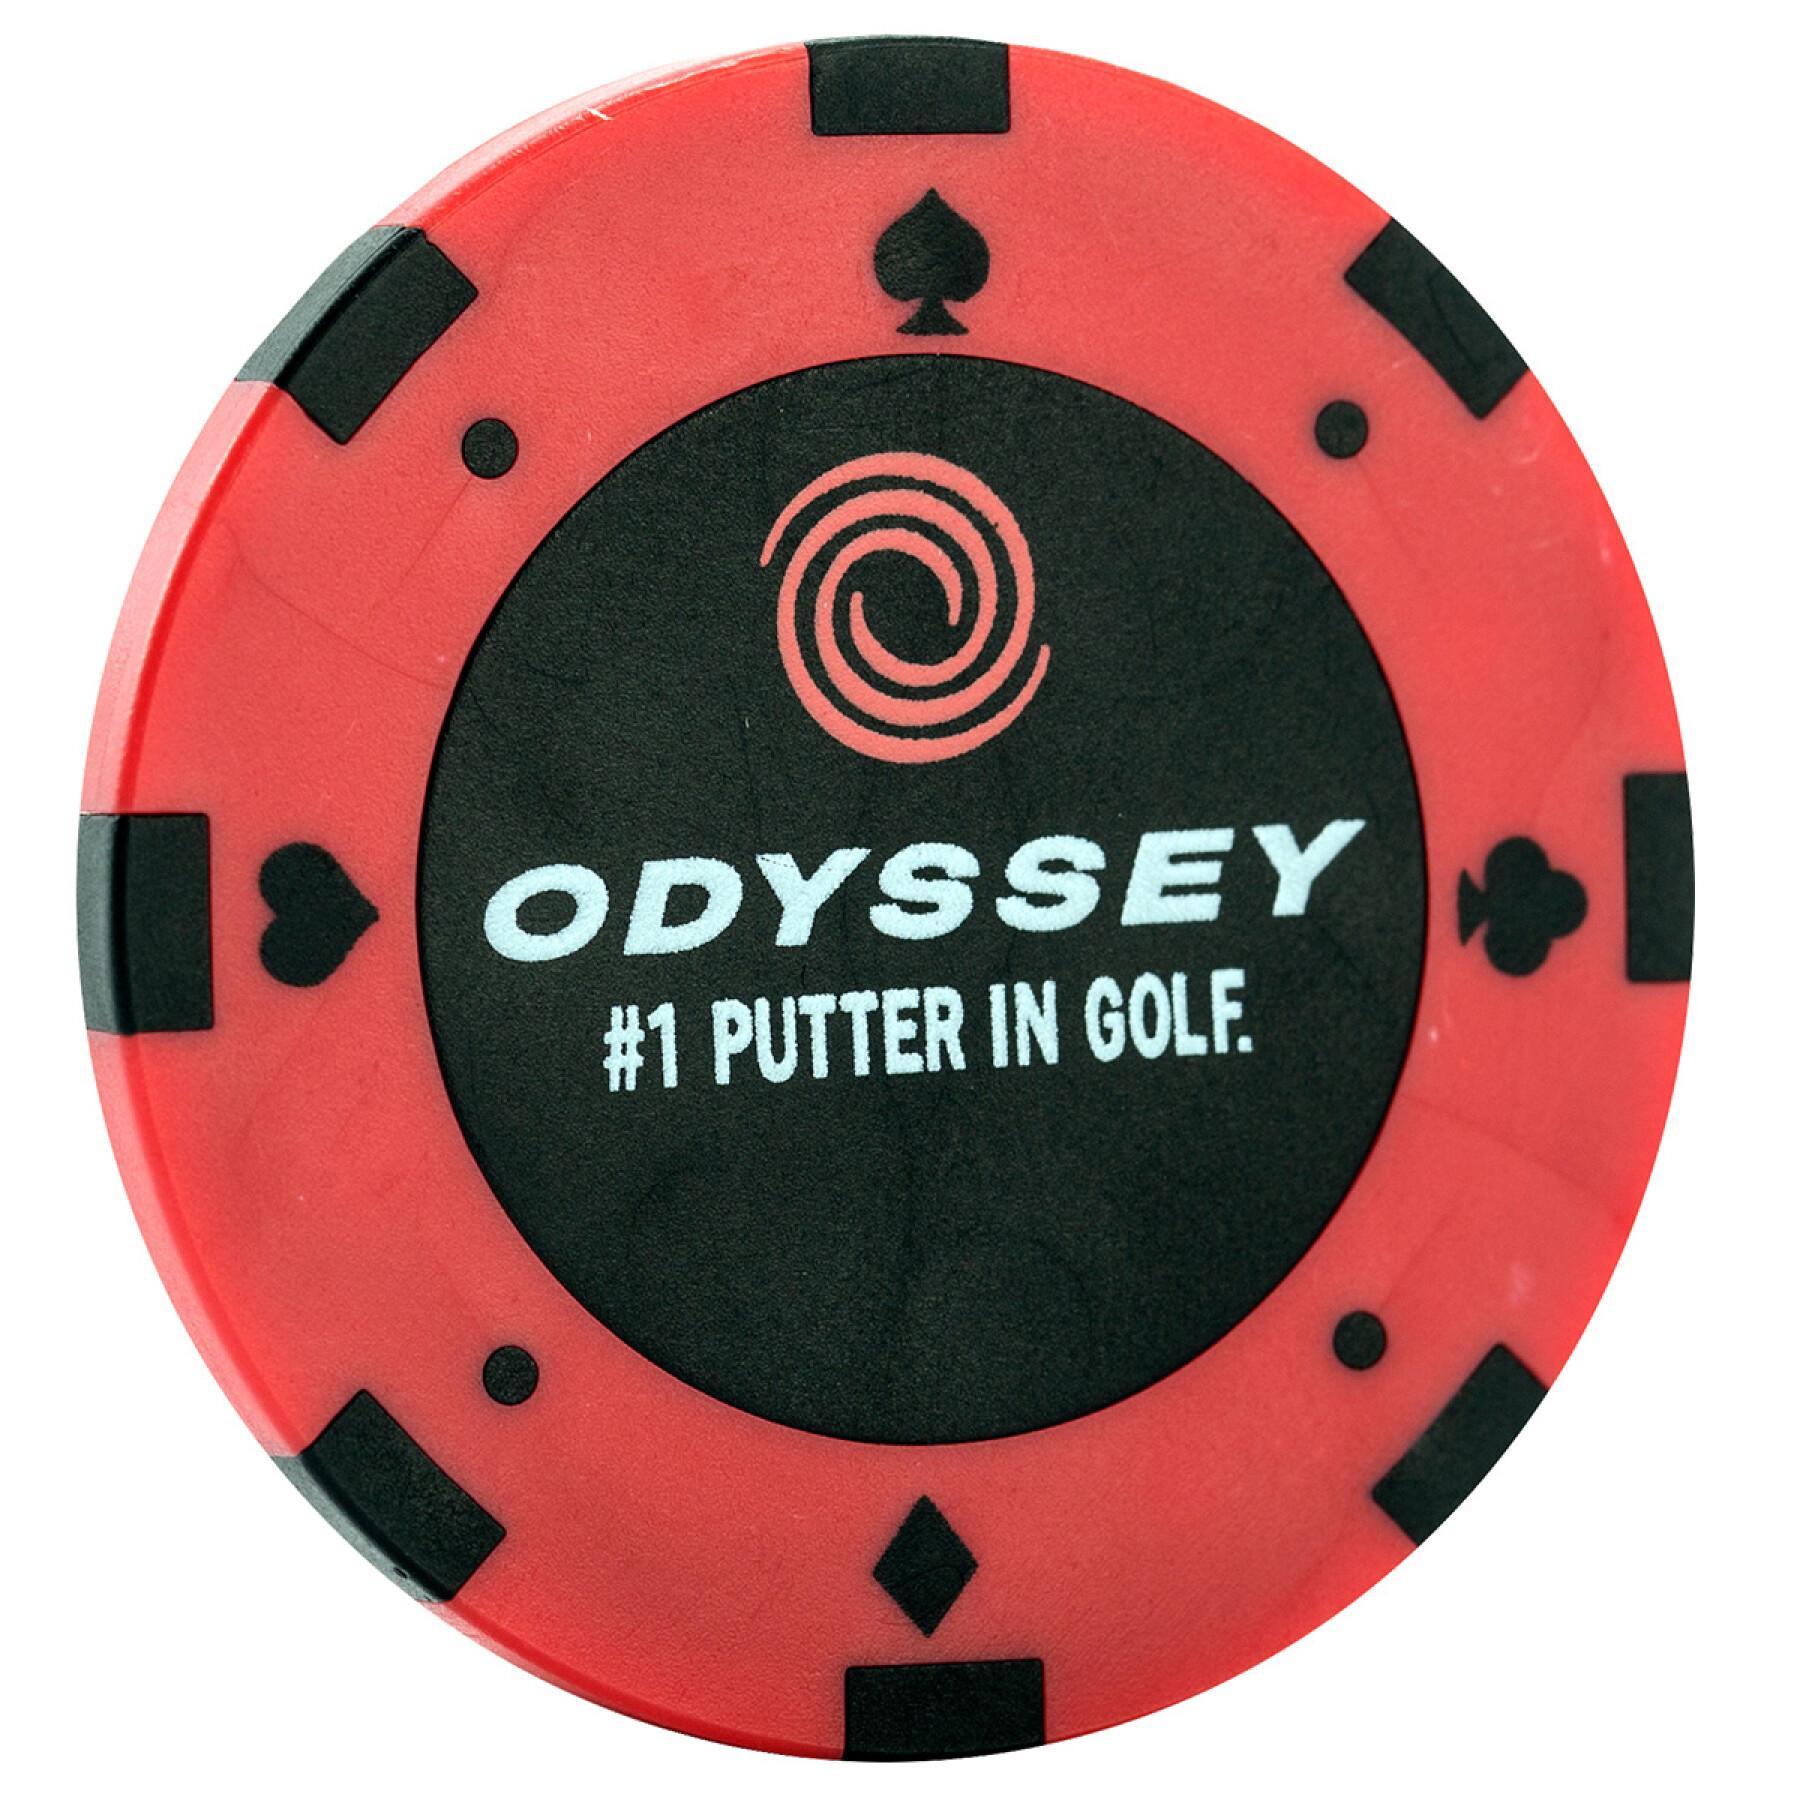 Golf ball markers Callaway odyssey poker chip